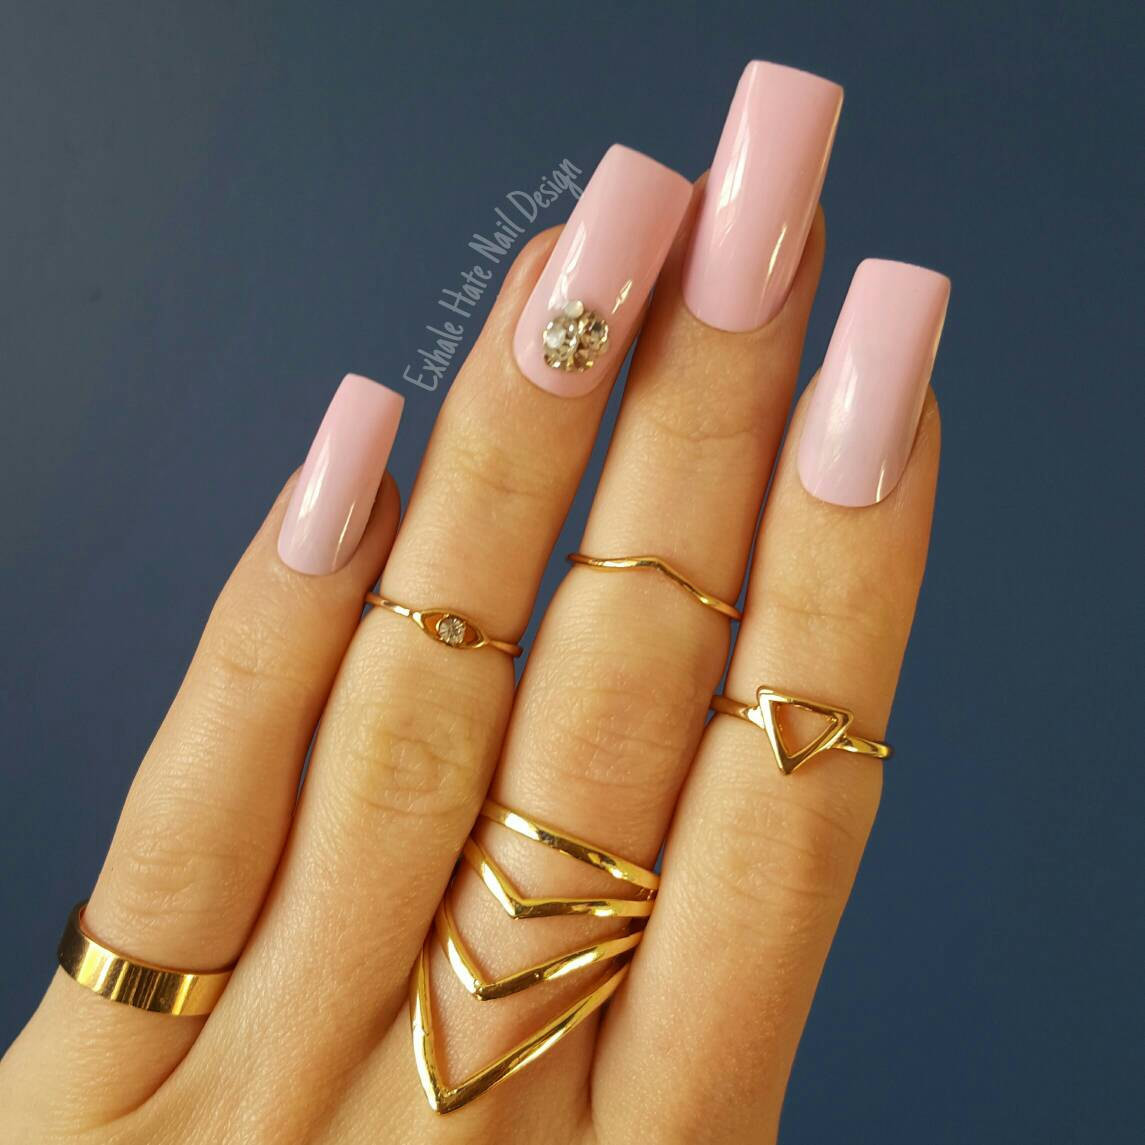 Light Pink Acrylic Nail Designs
 Top 45 Amazing Light Pink Acrylic Nails